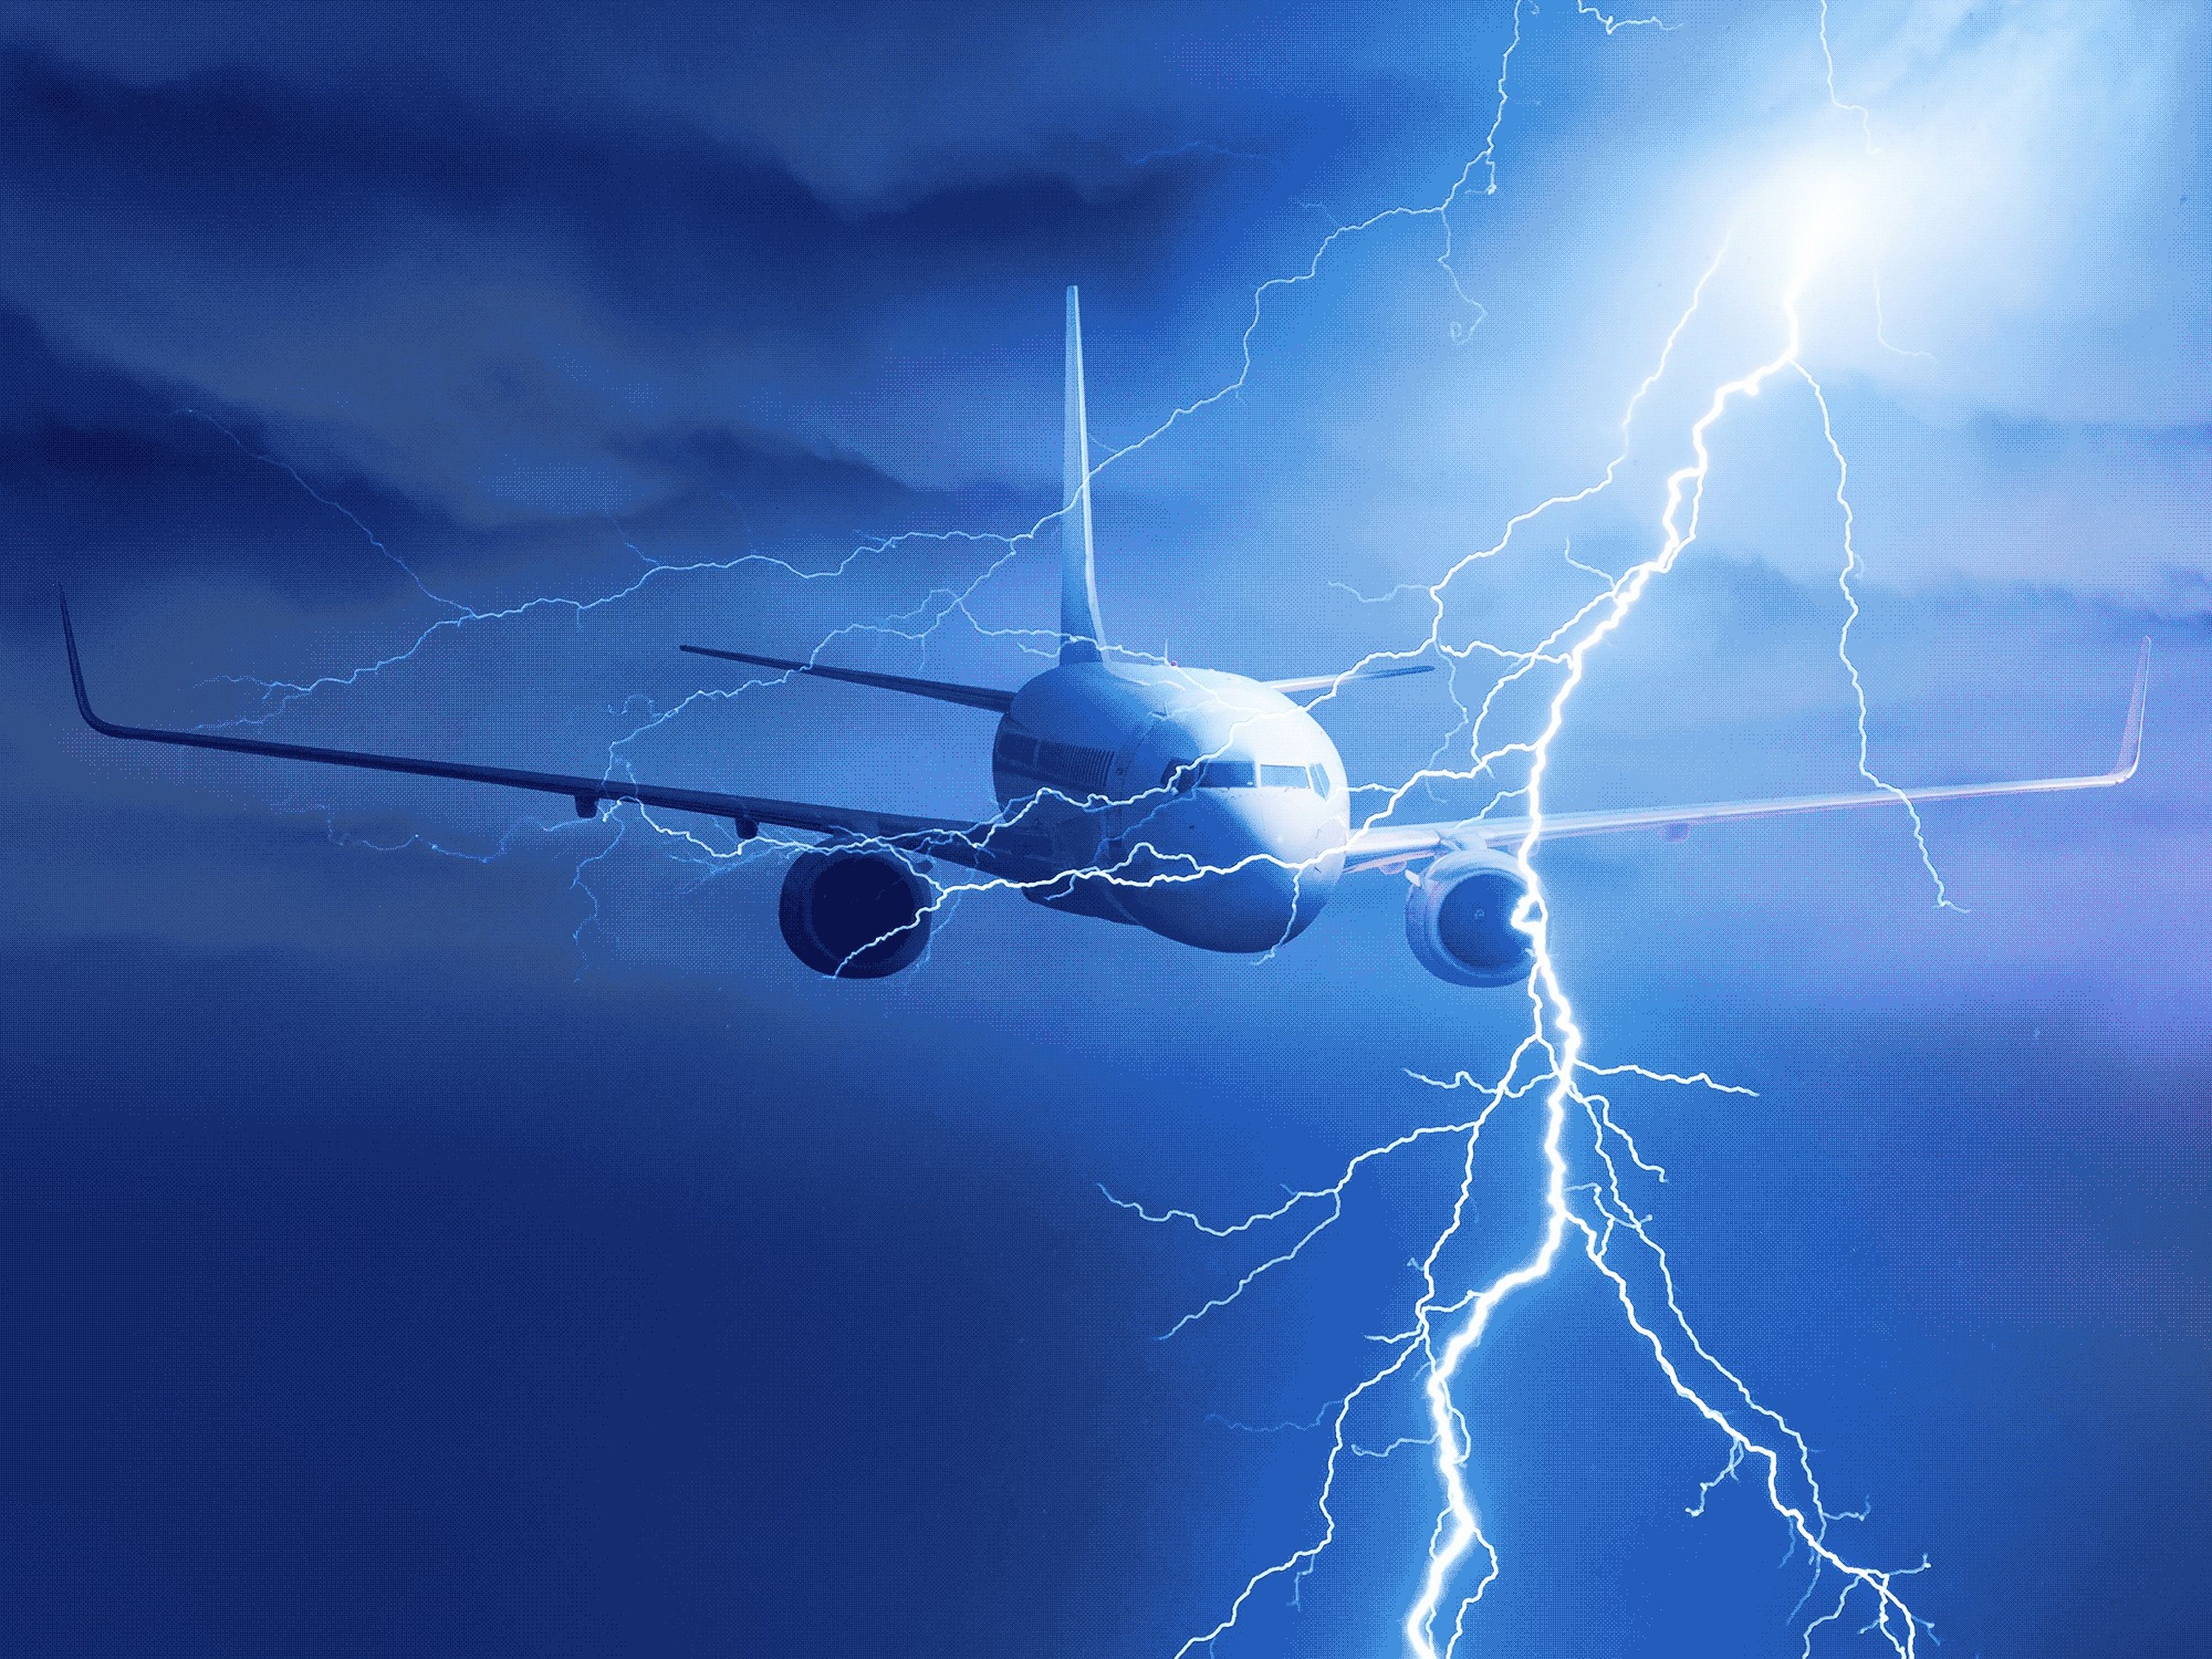 A plane flying through lightning